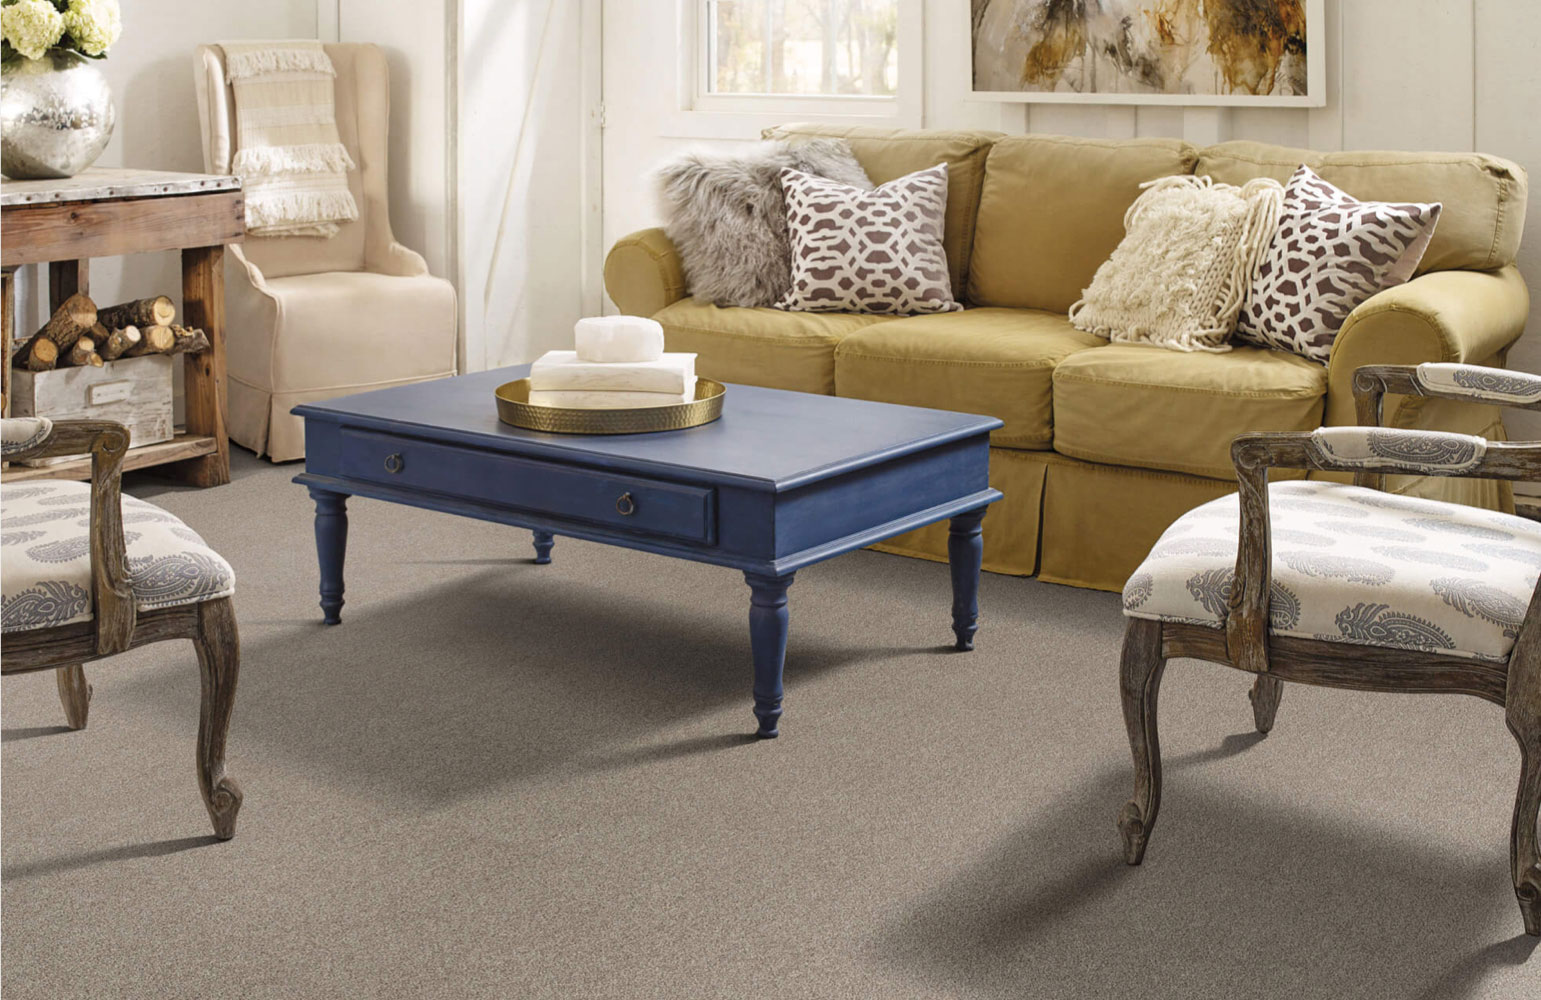 Living room carpet flooring | Carpet Source